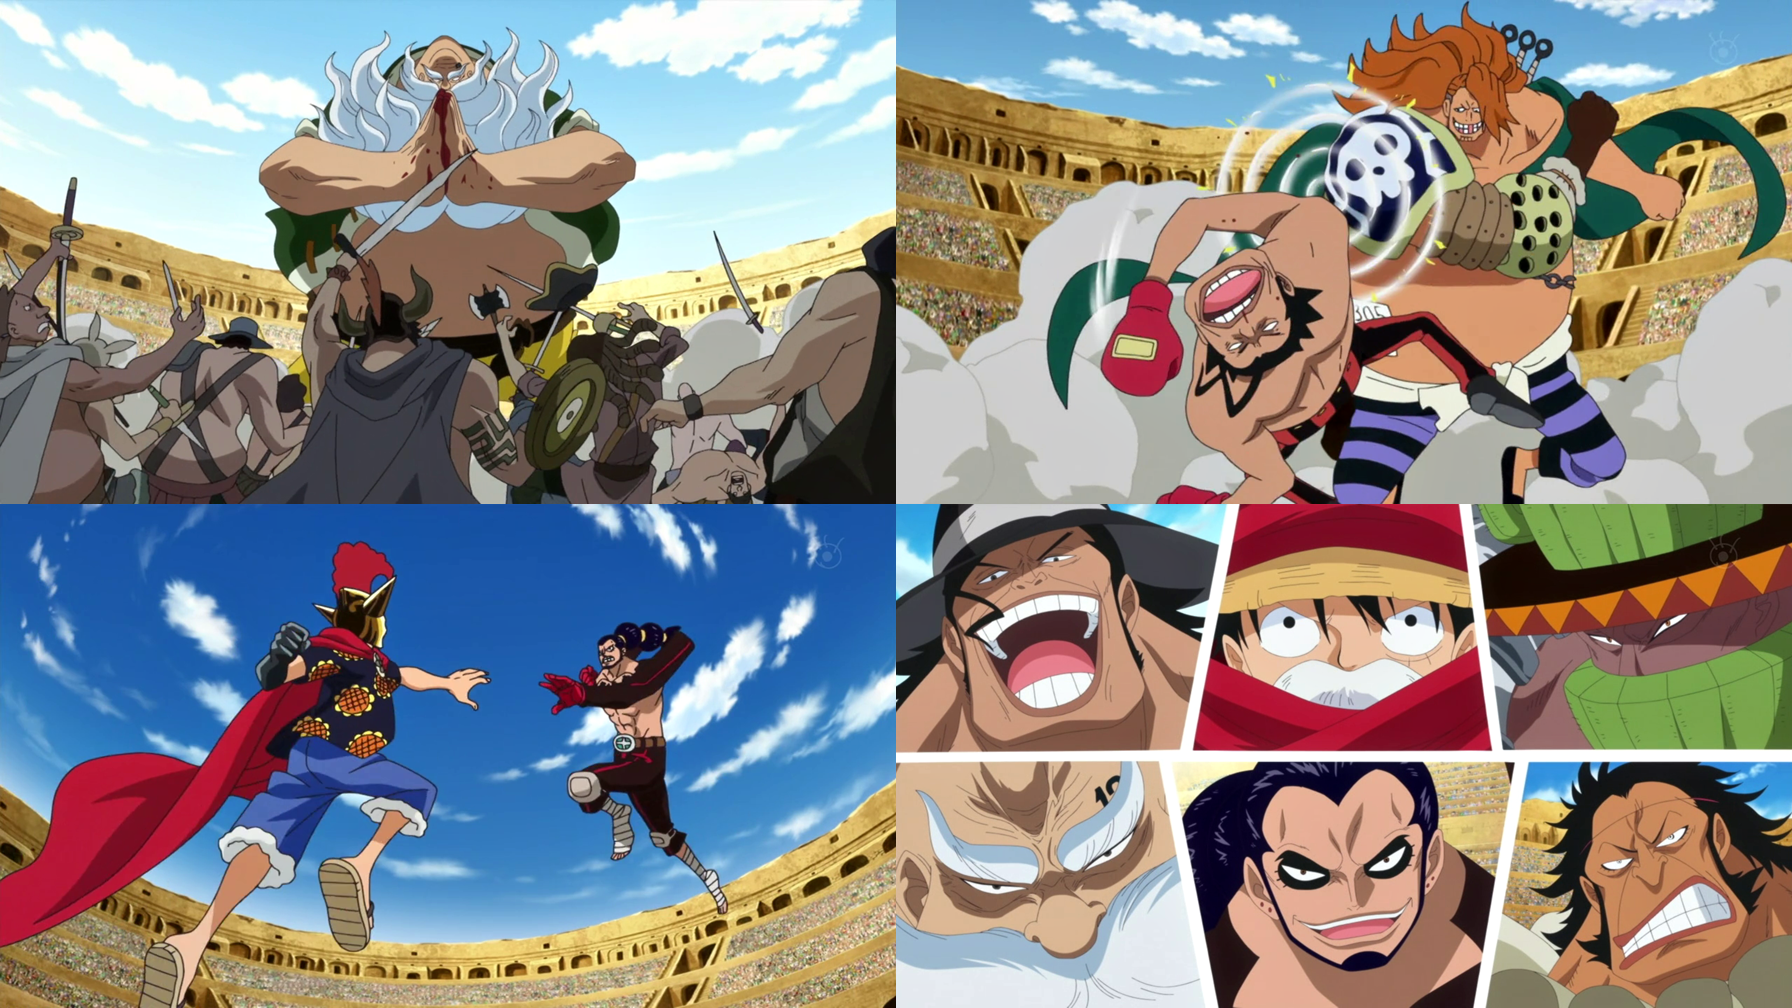 240p Download One Piece Episode 645 Subtitle Indonesia Movies School Mind